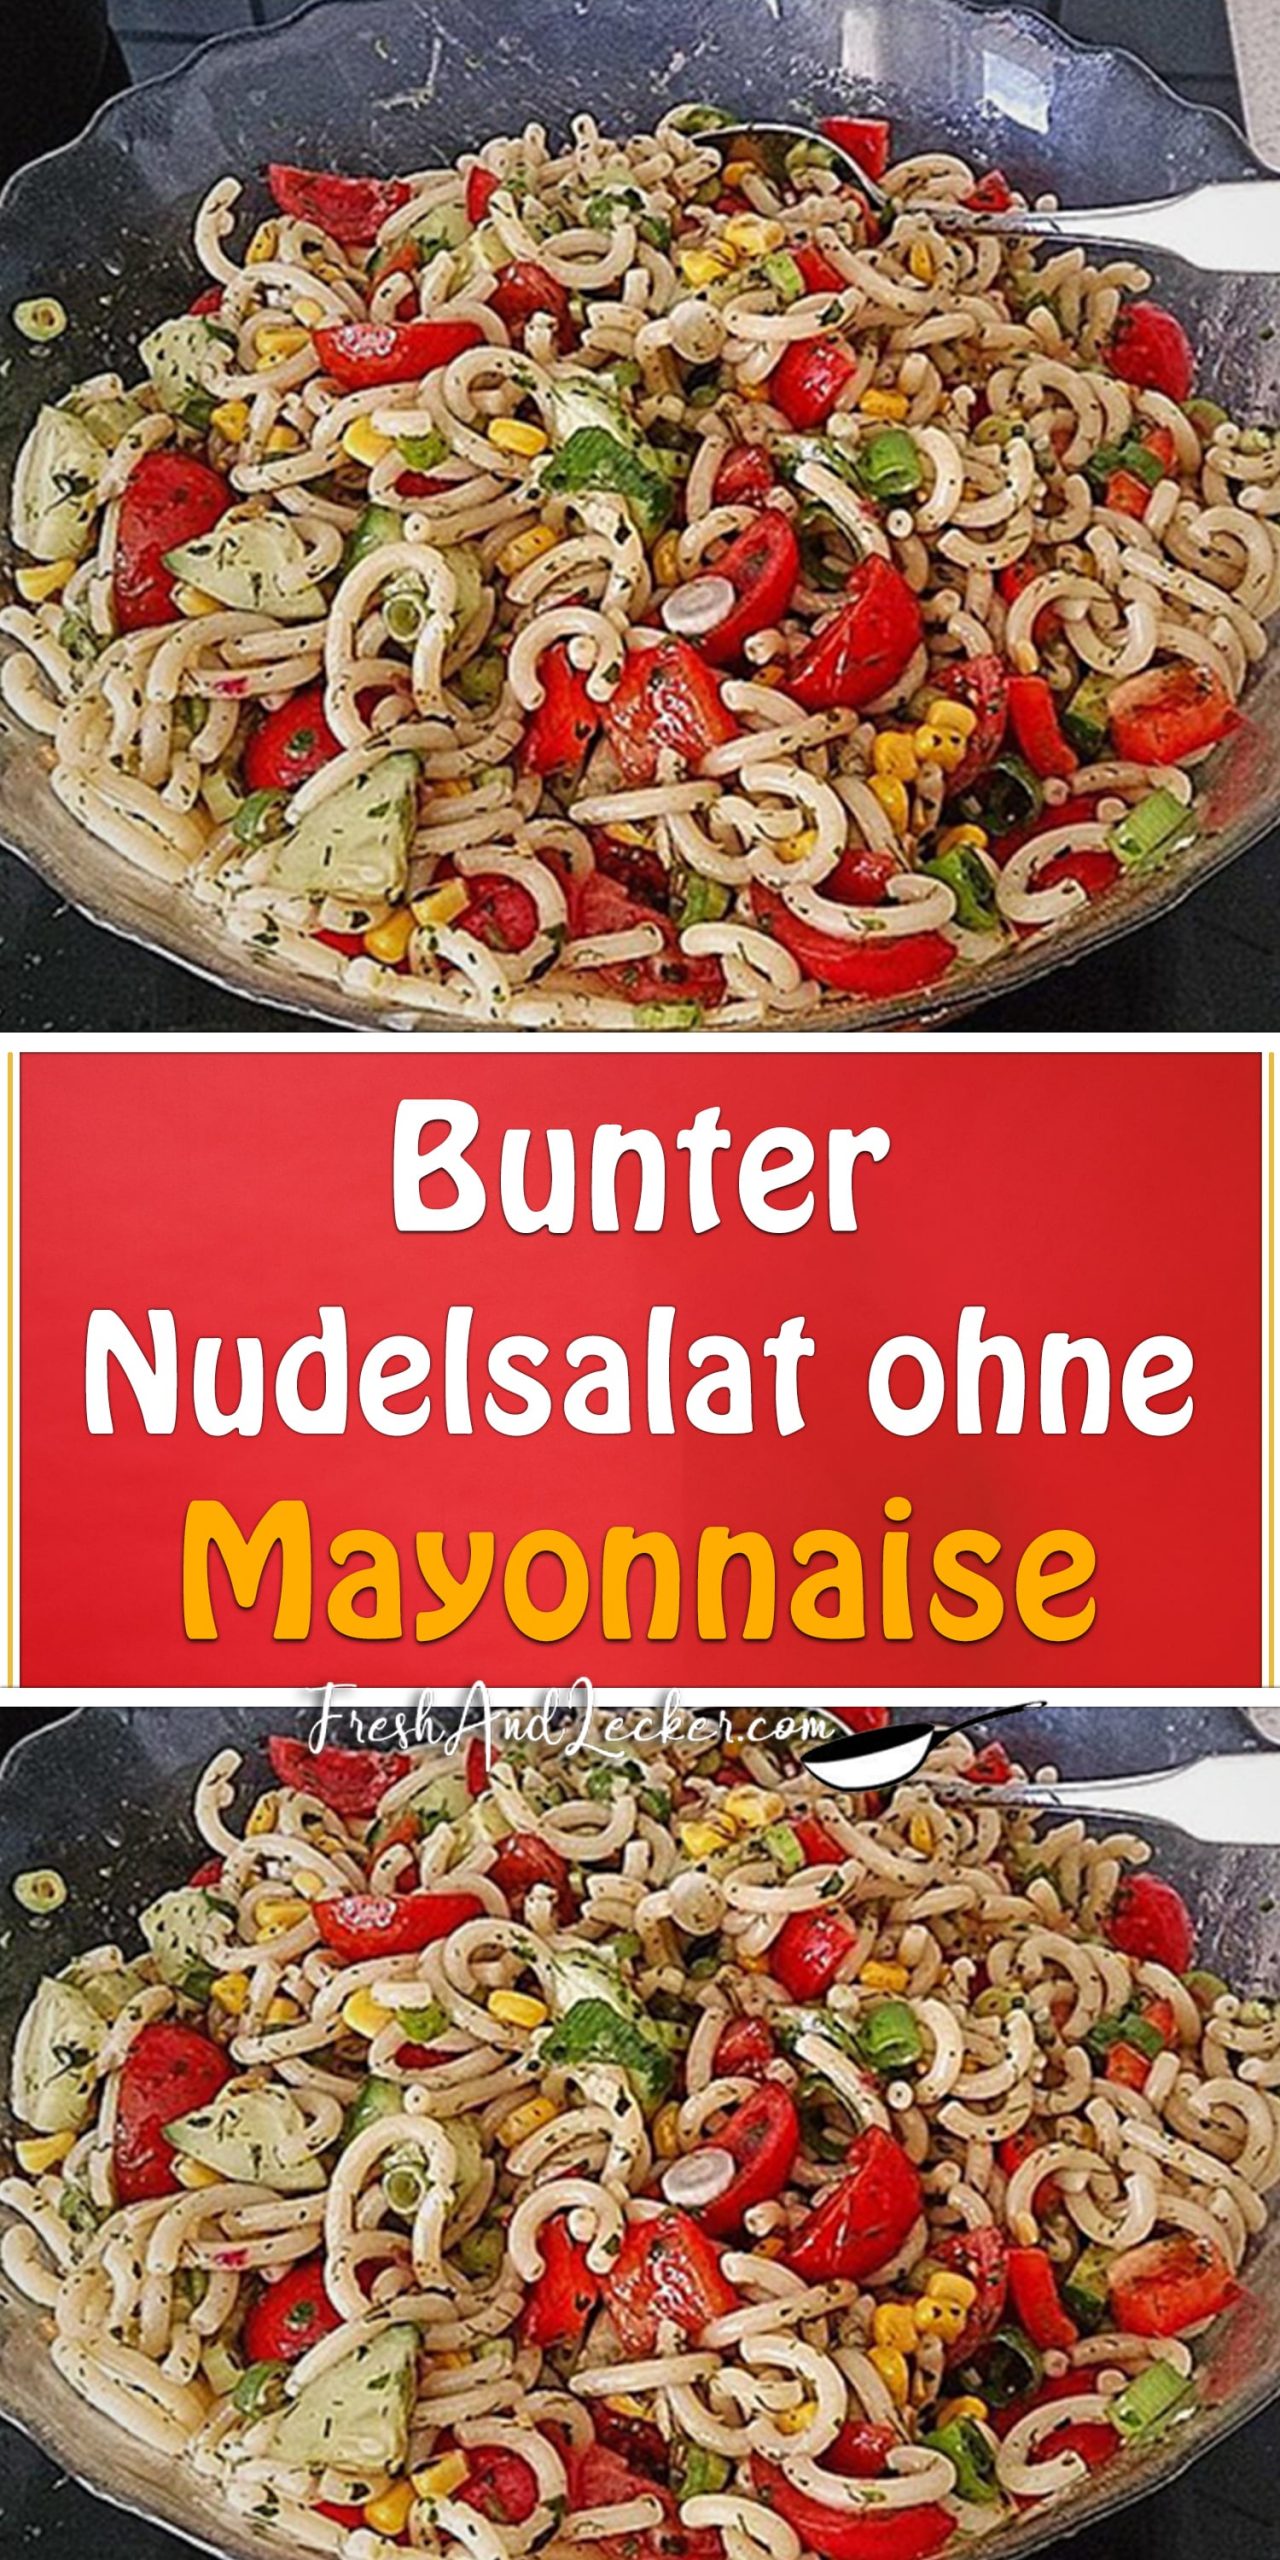 Bunter Nudelsalat ohne Mayonnaise - Fresh Lecker